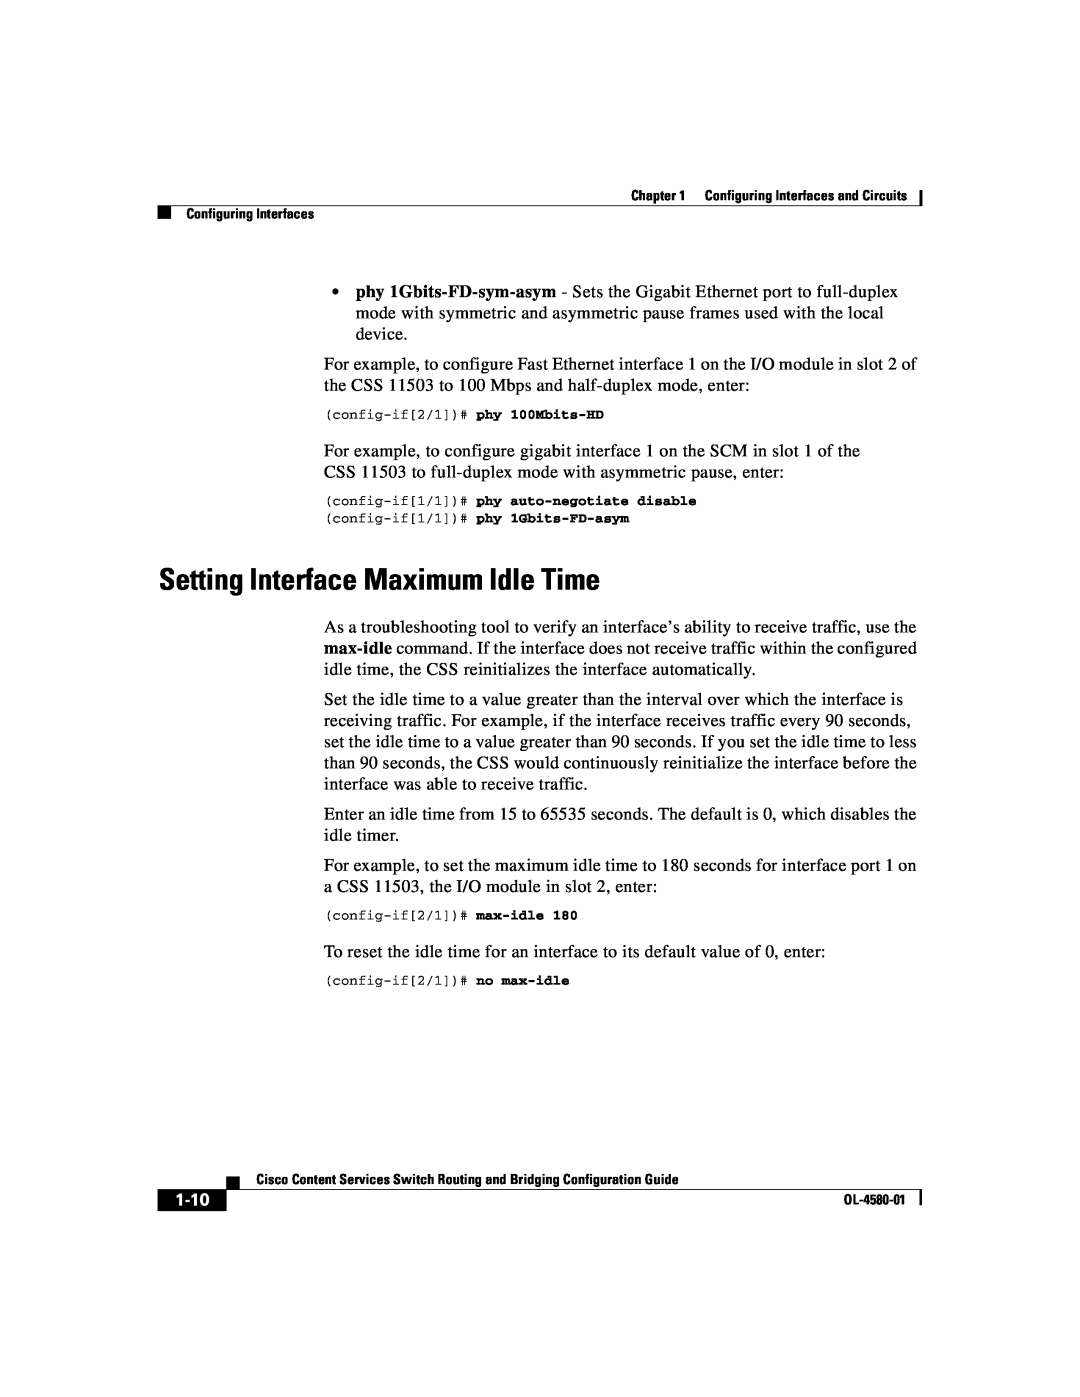 Cisco Systems OL-4580-01 manual Setting Interface Maximum Idle Time, 1-10 